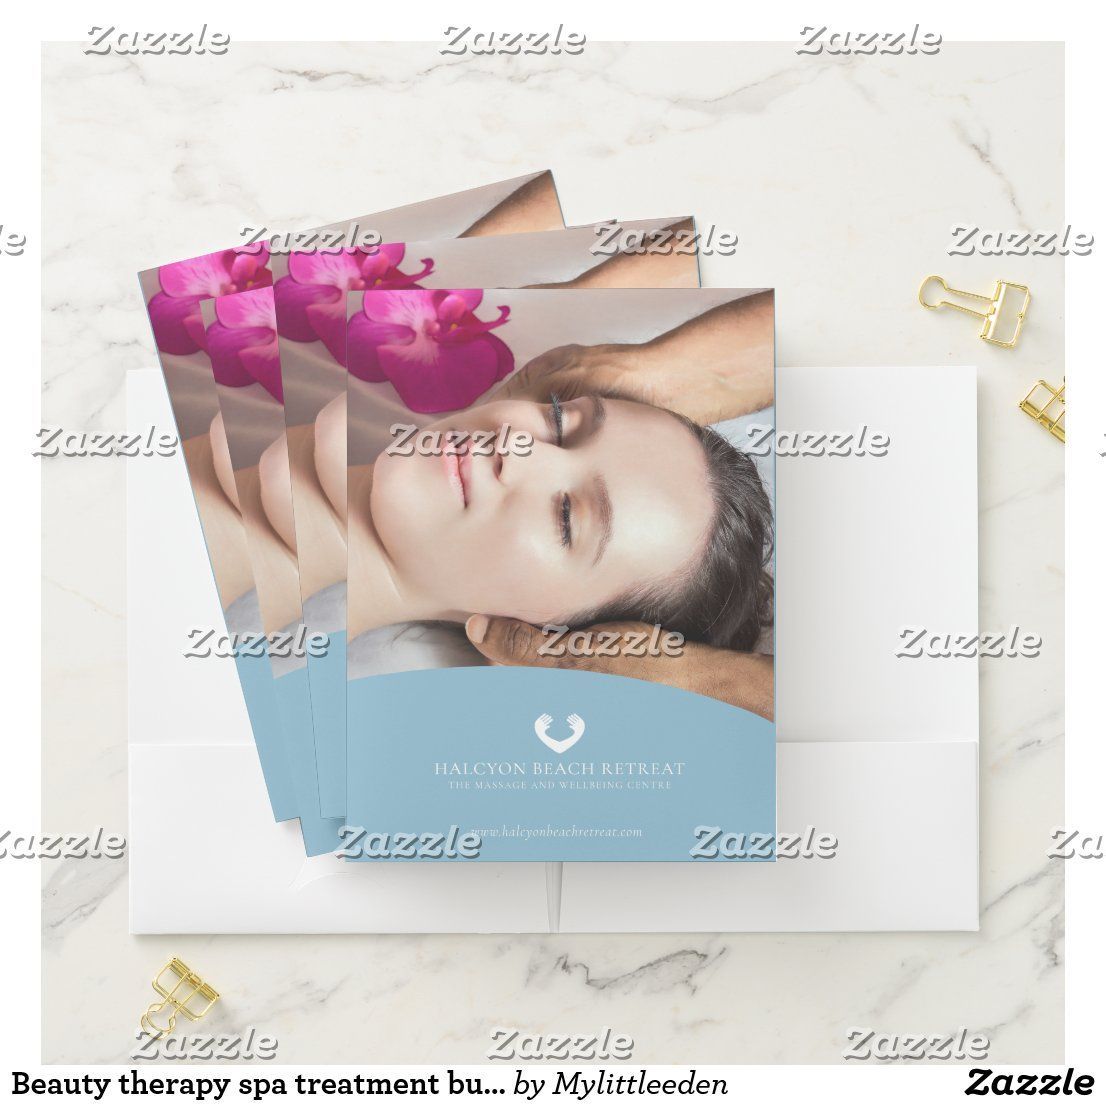 Beauty therapy spa treatment business folder -   18 beauty Spa treatment ideas